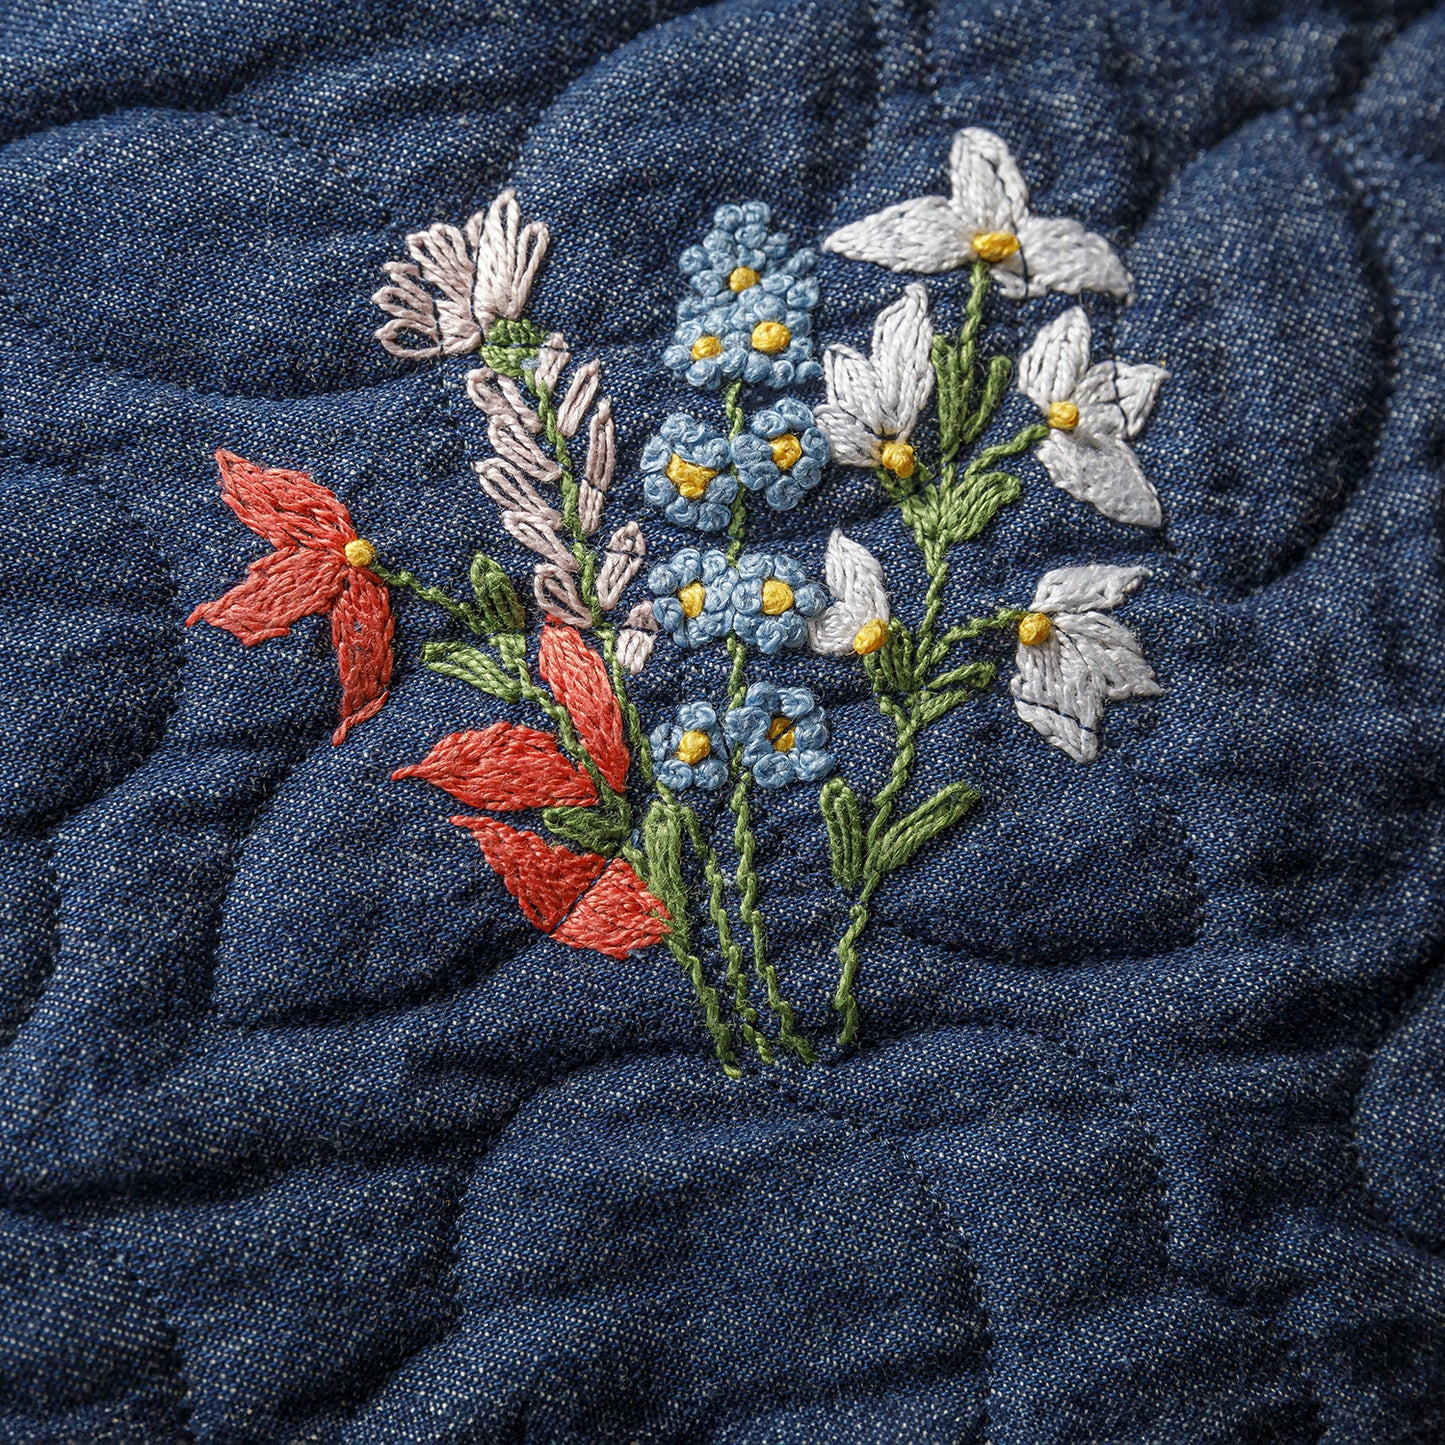 PREORDER - Ingrid's Wildflowers - An Heirloom Embroidery Kit by Missouri Star Alternative View #31